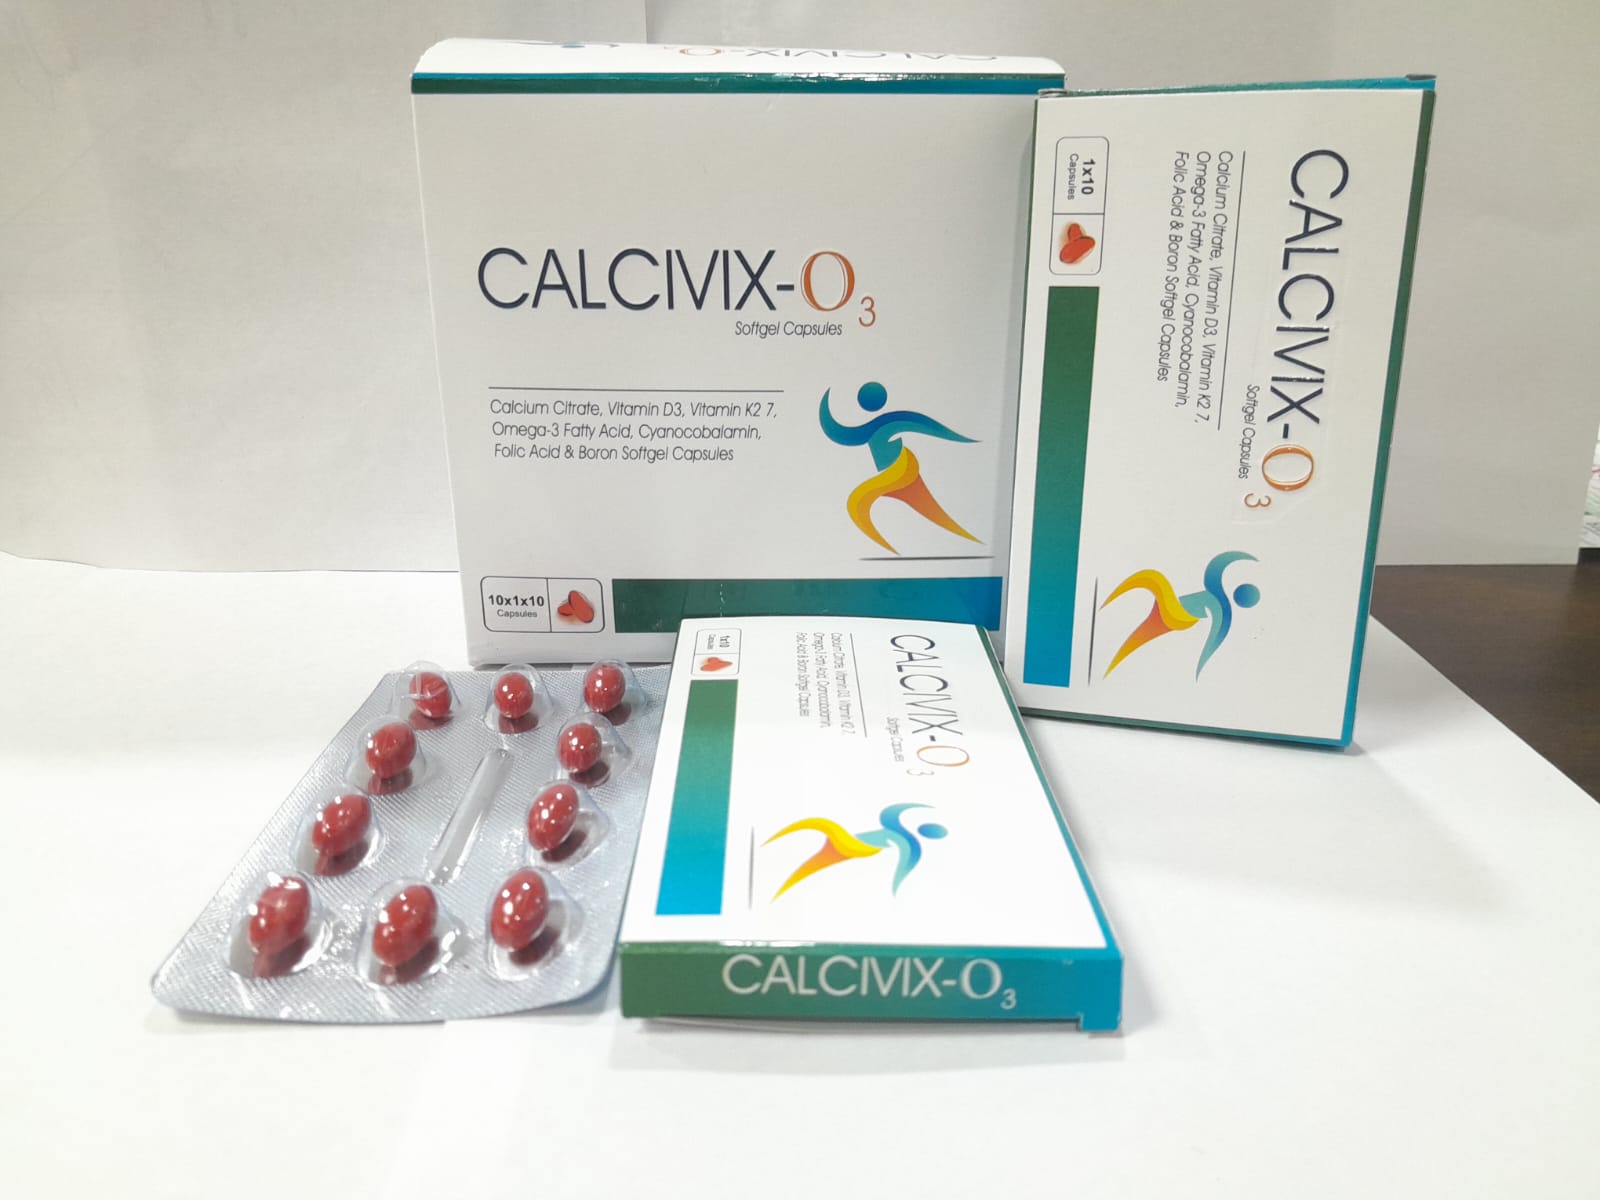 Product Name: CALCIVIX O3 Softgel Capsules, Compositions of CALCIVIX O3 Softgel Capsules are Calcim Citrate 500 mg (Eq. to Elemental Calcium 105 mg), Vitamin D3 400 IU, Vitamin K2 7 45 mcg, Omega-3 Fatty Acid contains : Eicosapentaenoic Acid (EPA) 90 mg, Docosahexaenoic Acid (DHA) 60 mg, Cyanocobalamin 1 mcg, Folic A - Feravix Lifesciences